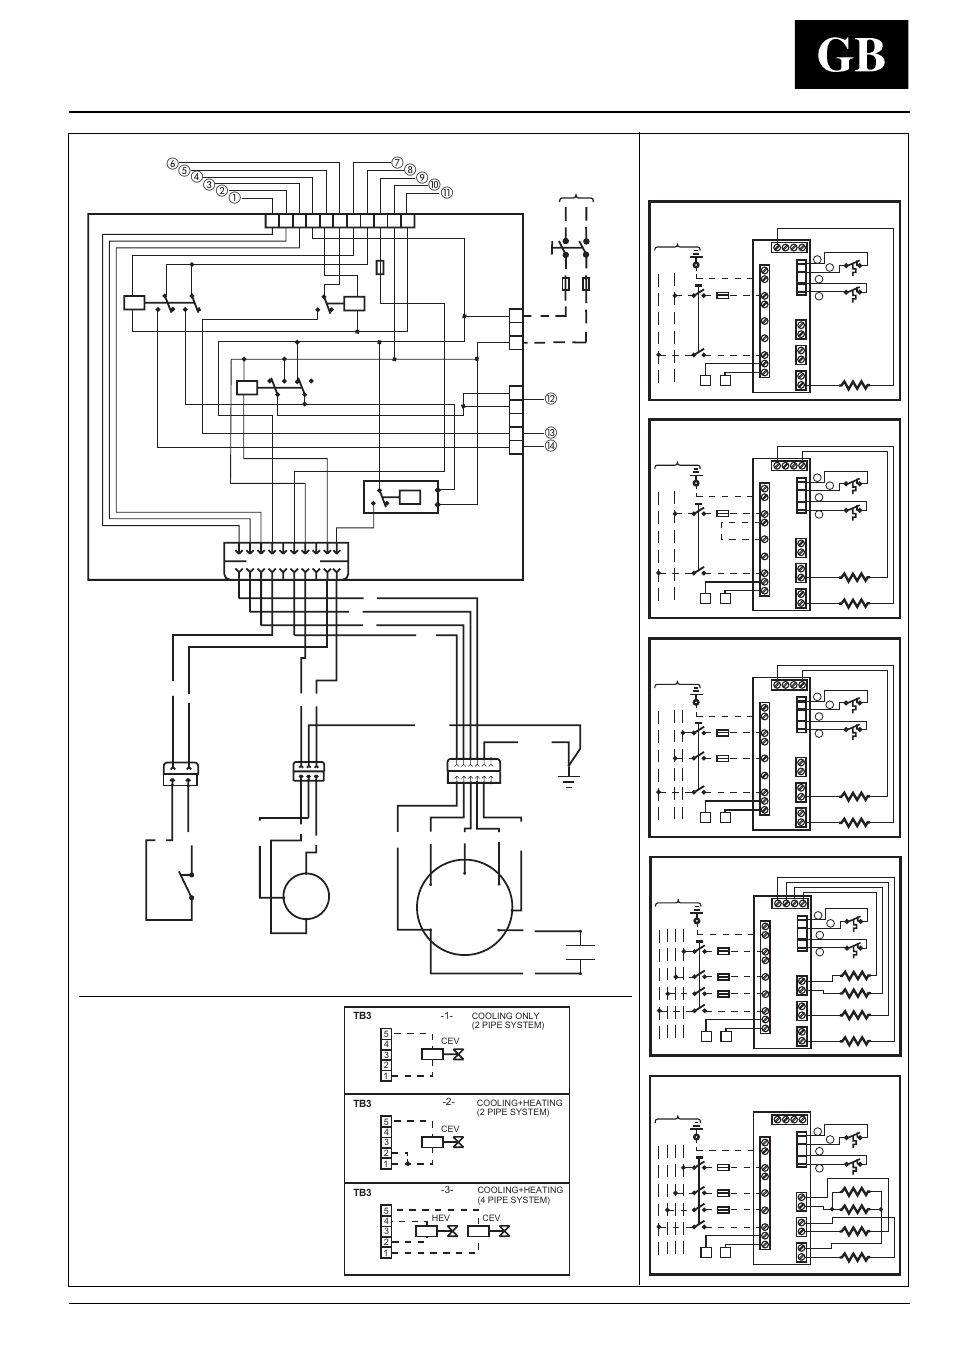 42 gw, Electric heater supply, Wiring diagram, standard version unit